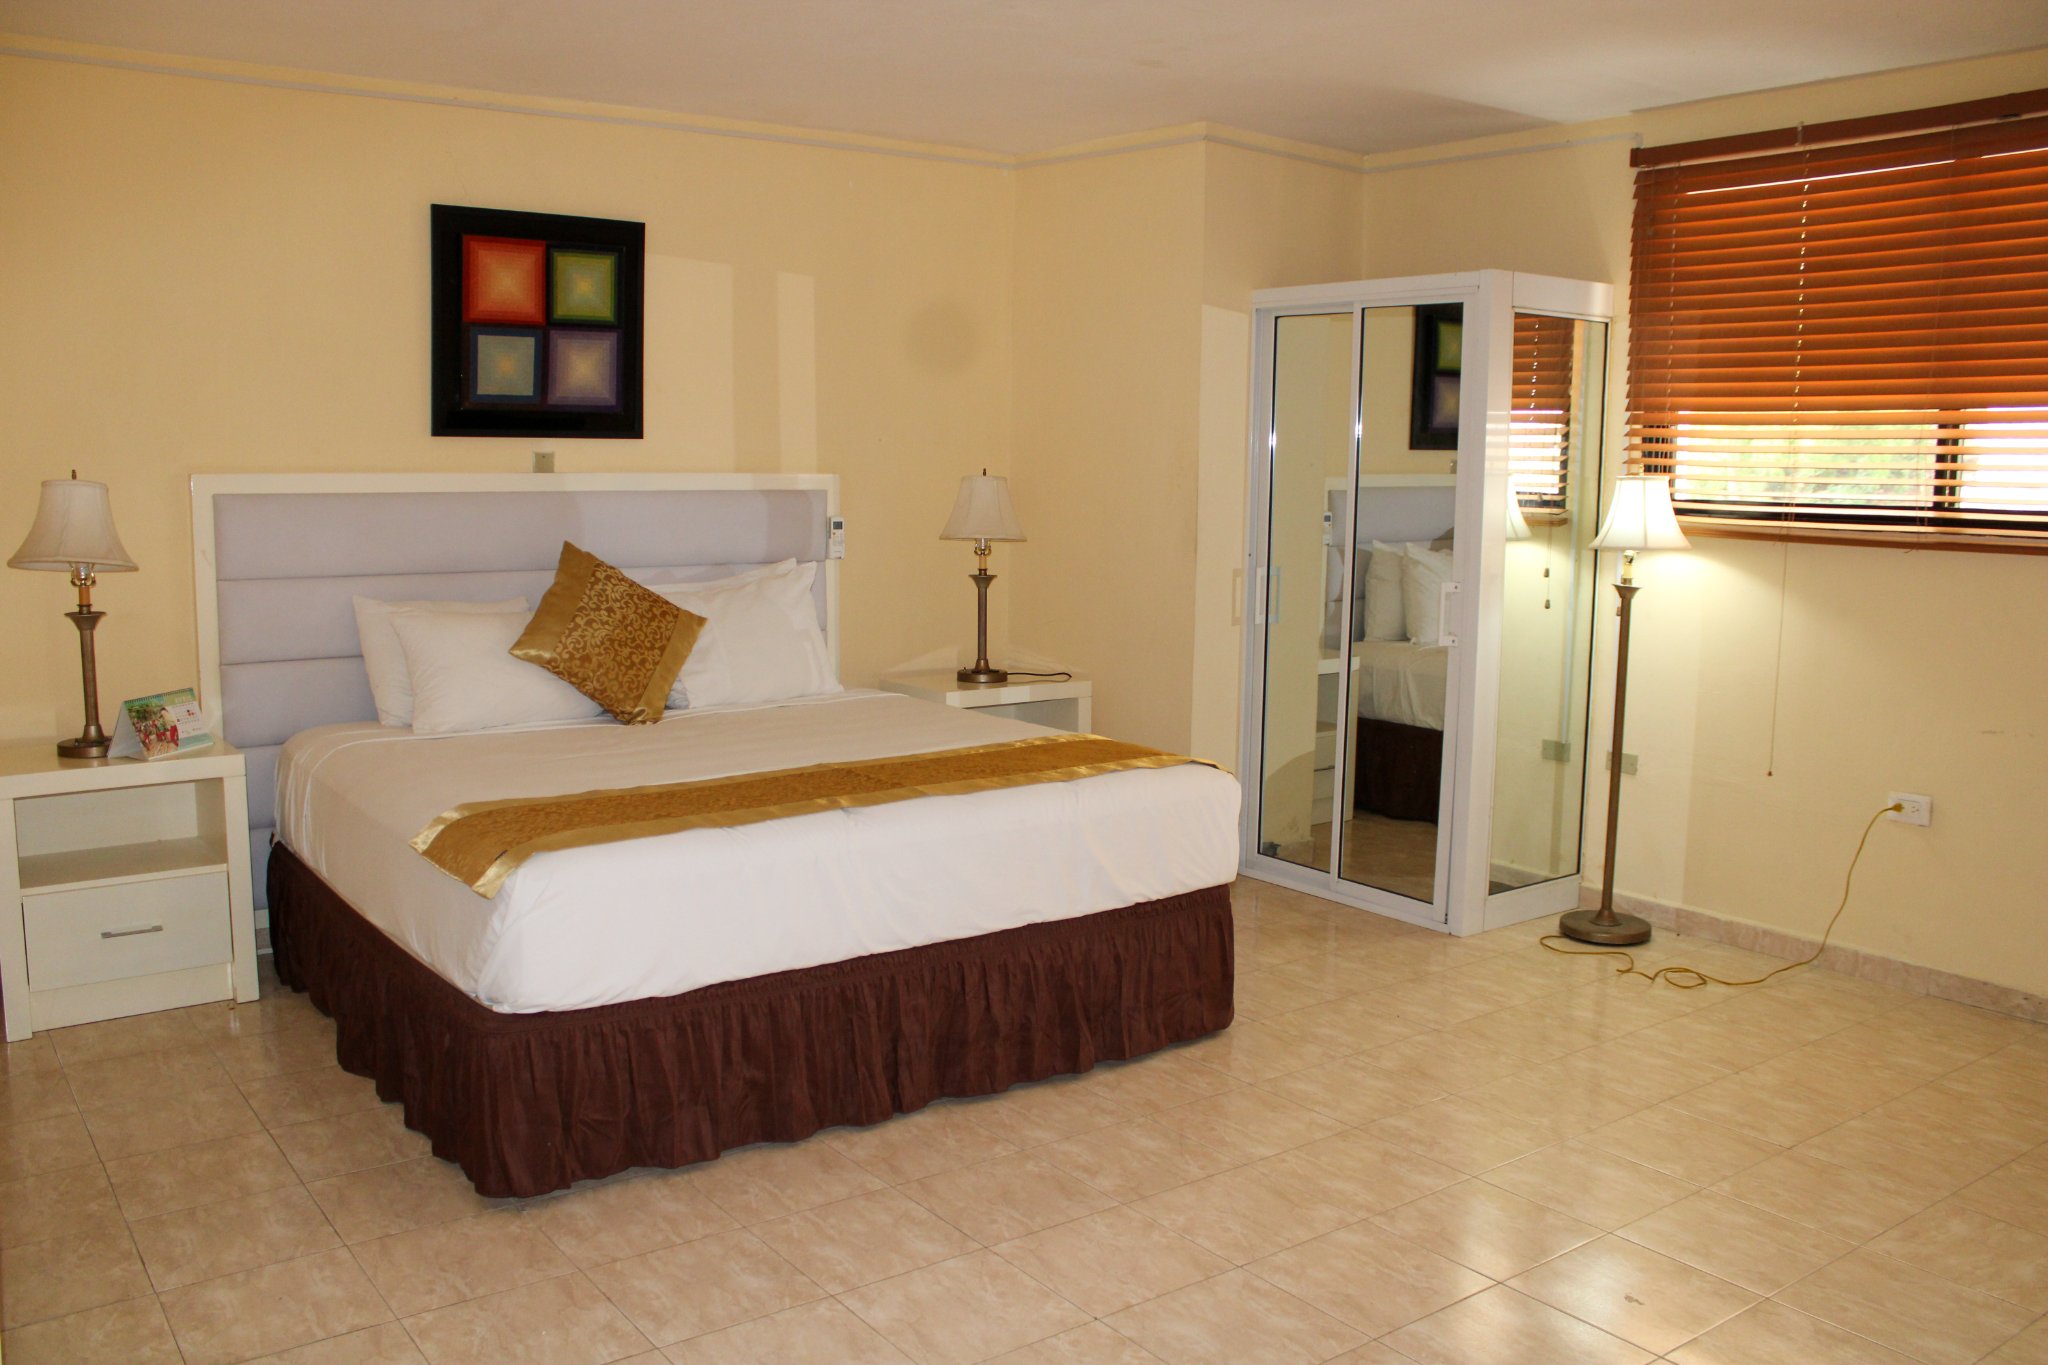 The Residence Royale Hotel Experience – in Cap-Haitien, Haiti